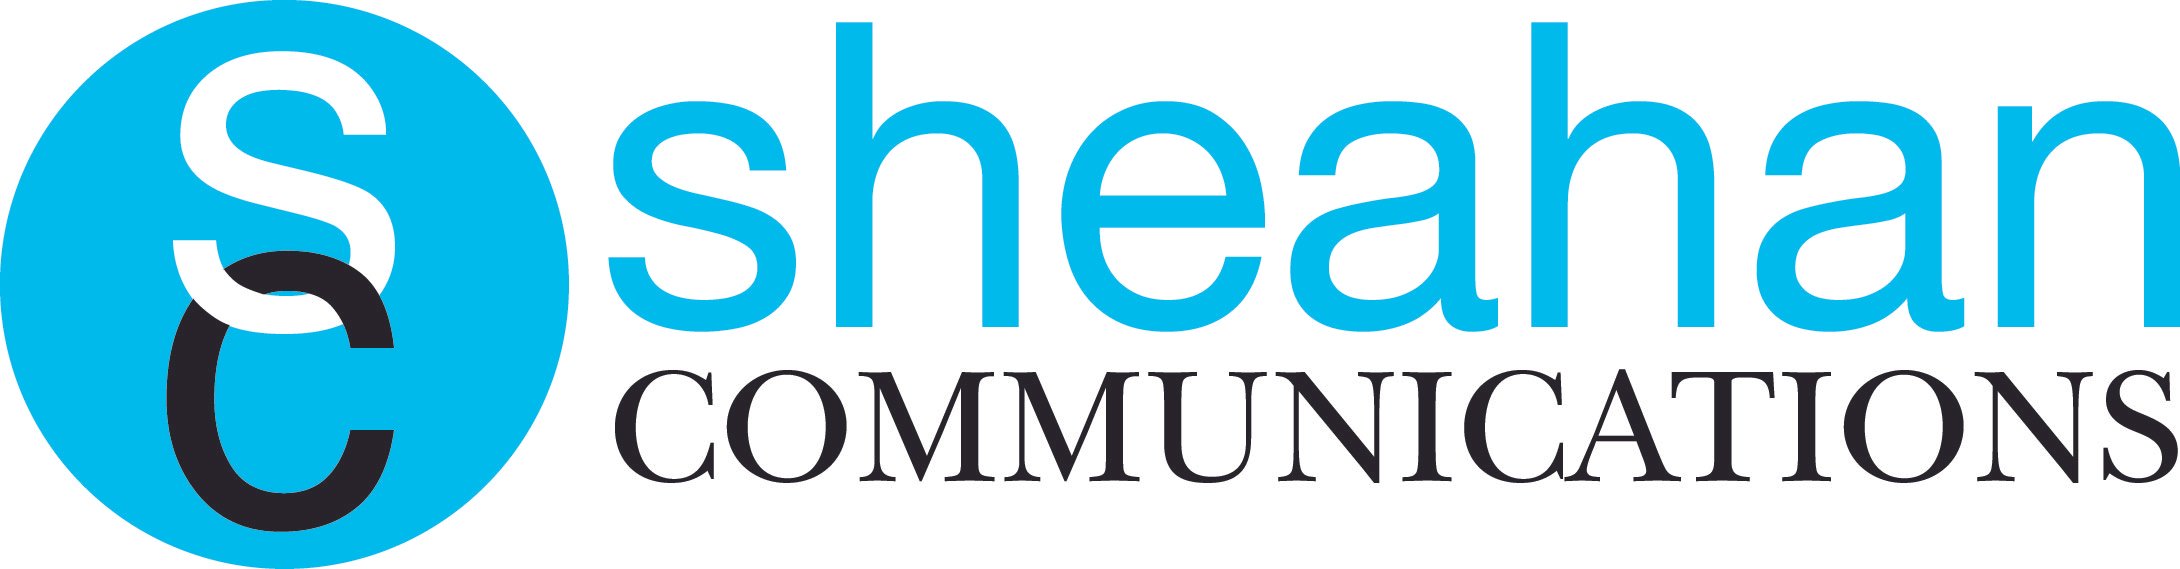 Sheahan Communications_Logo.jpg